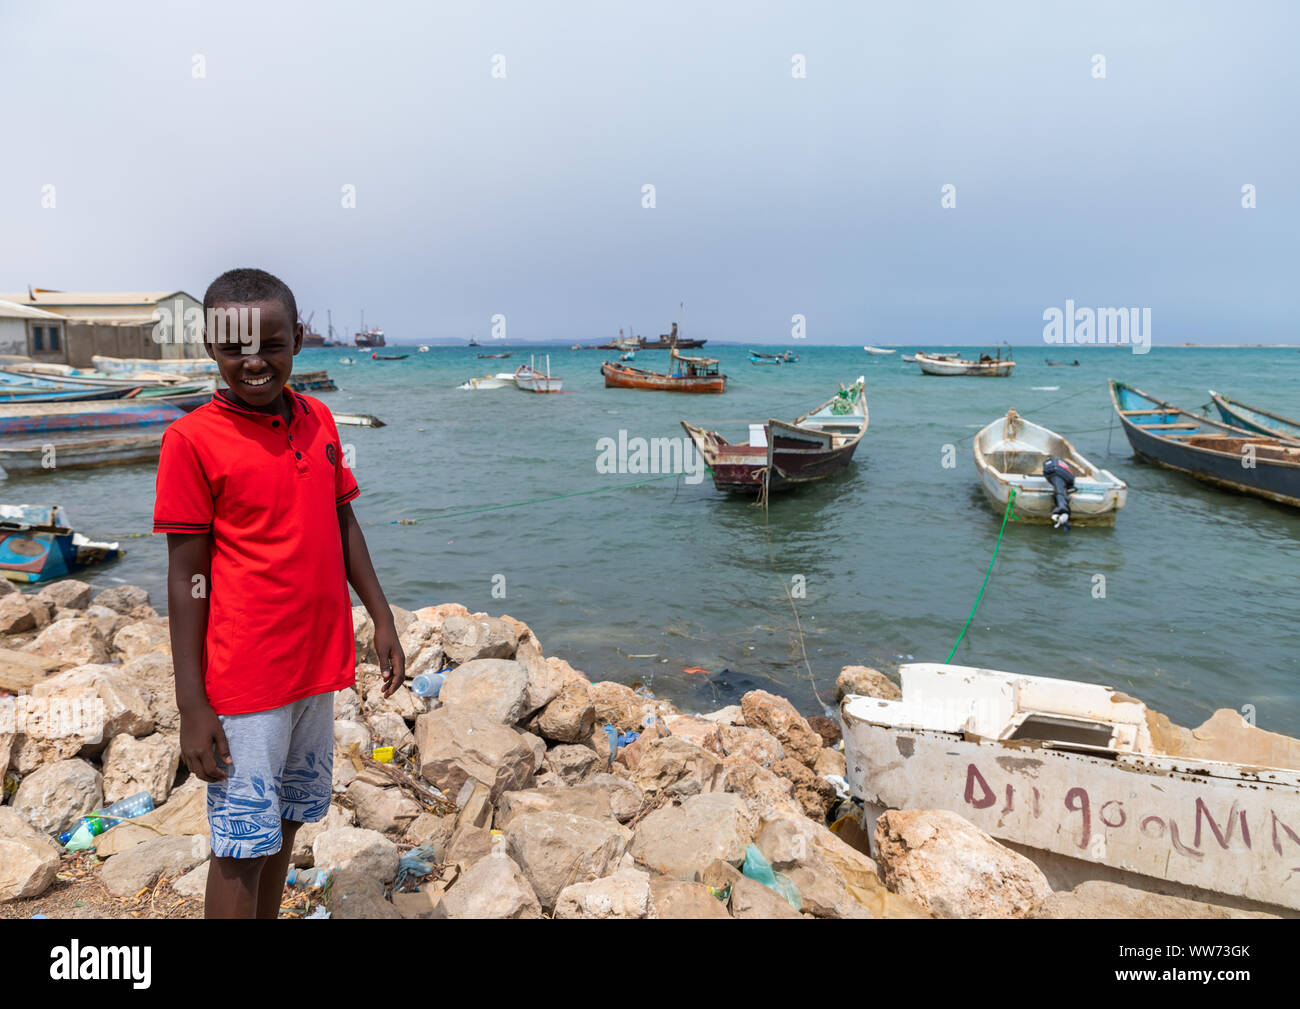 Somali boy in front of stationing boats in the port, Sahil region, Berbera, Somaliland Stock Photo